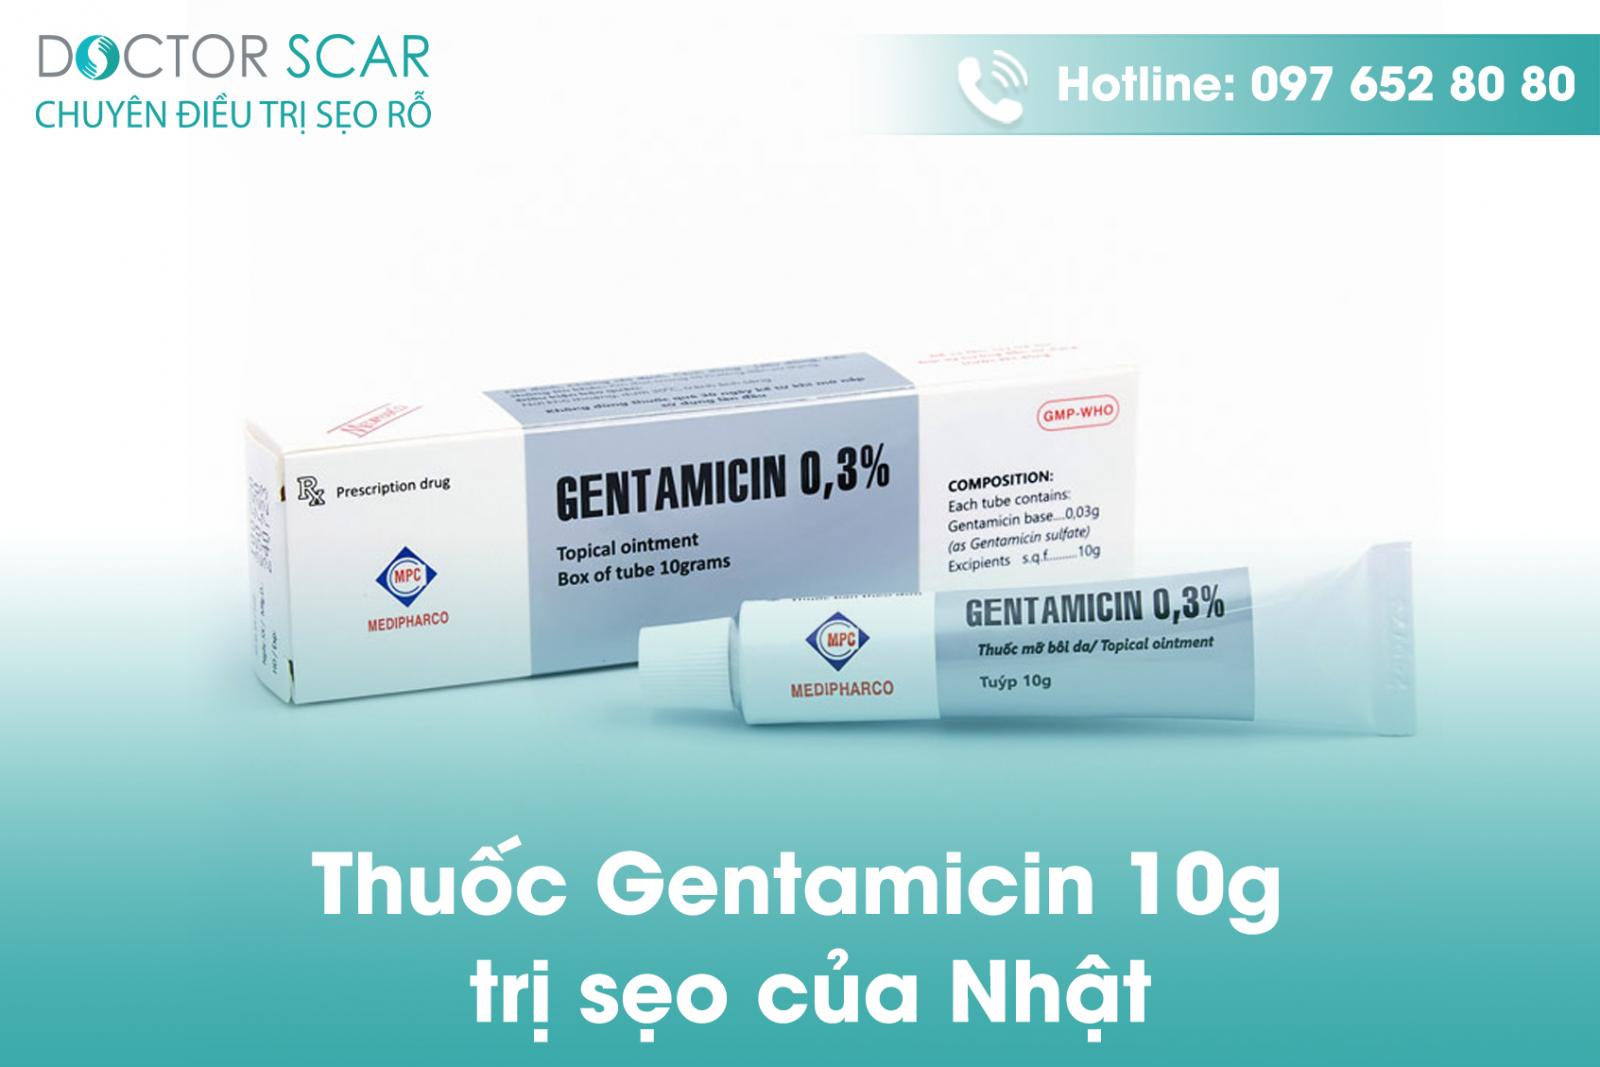 Kem gentamicin 10g trị sẹo của Nhật